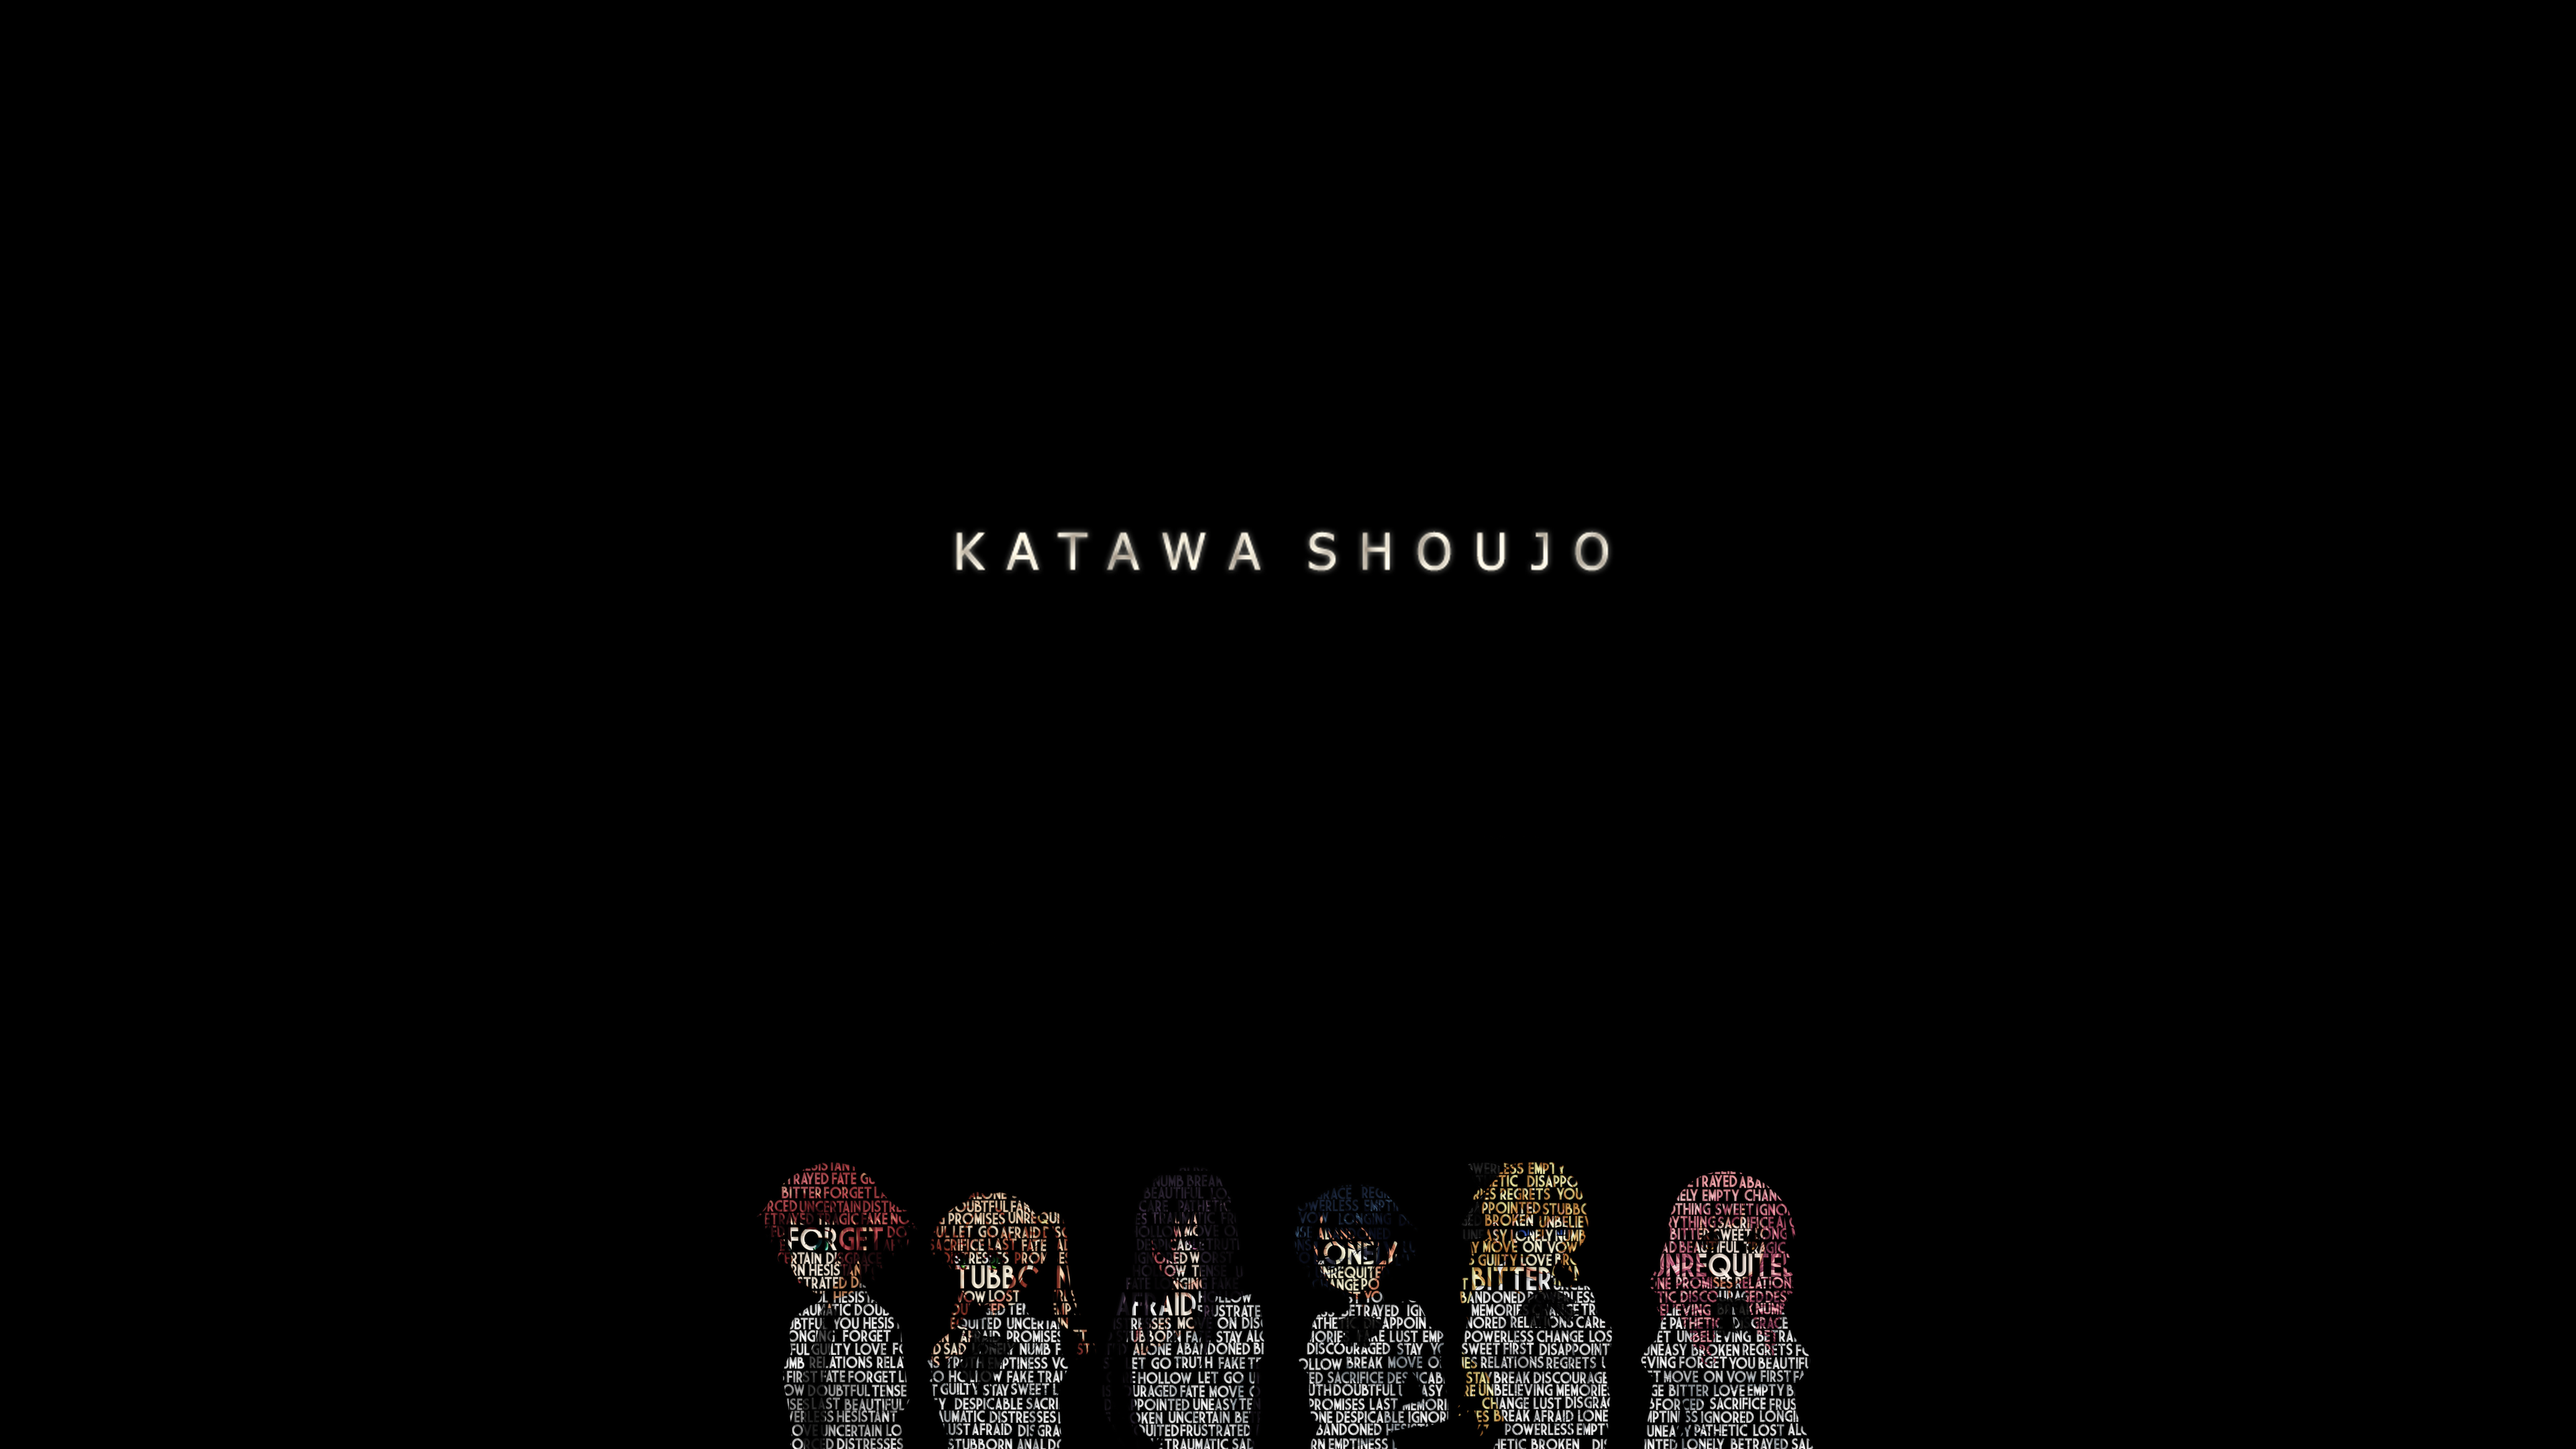 59 Katawa Shoujo HD Wallpapers | Backgrounds - Wallpaper Abyss ...